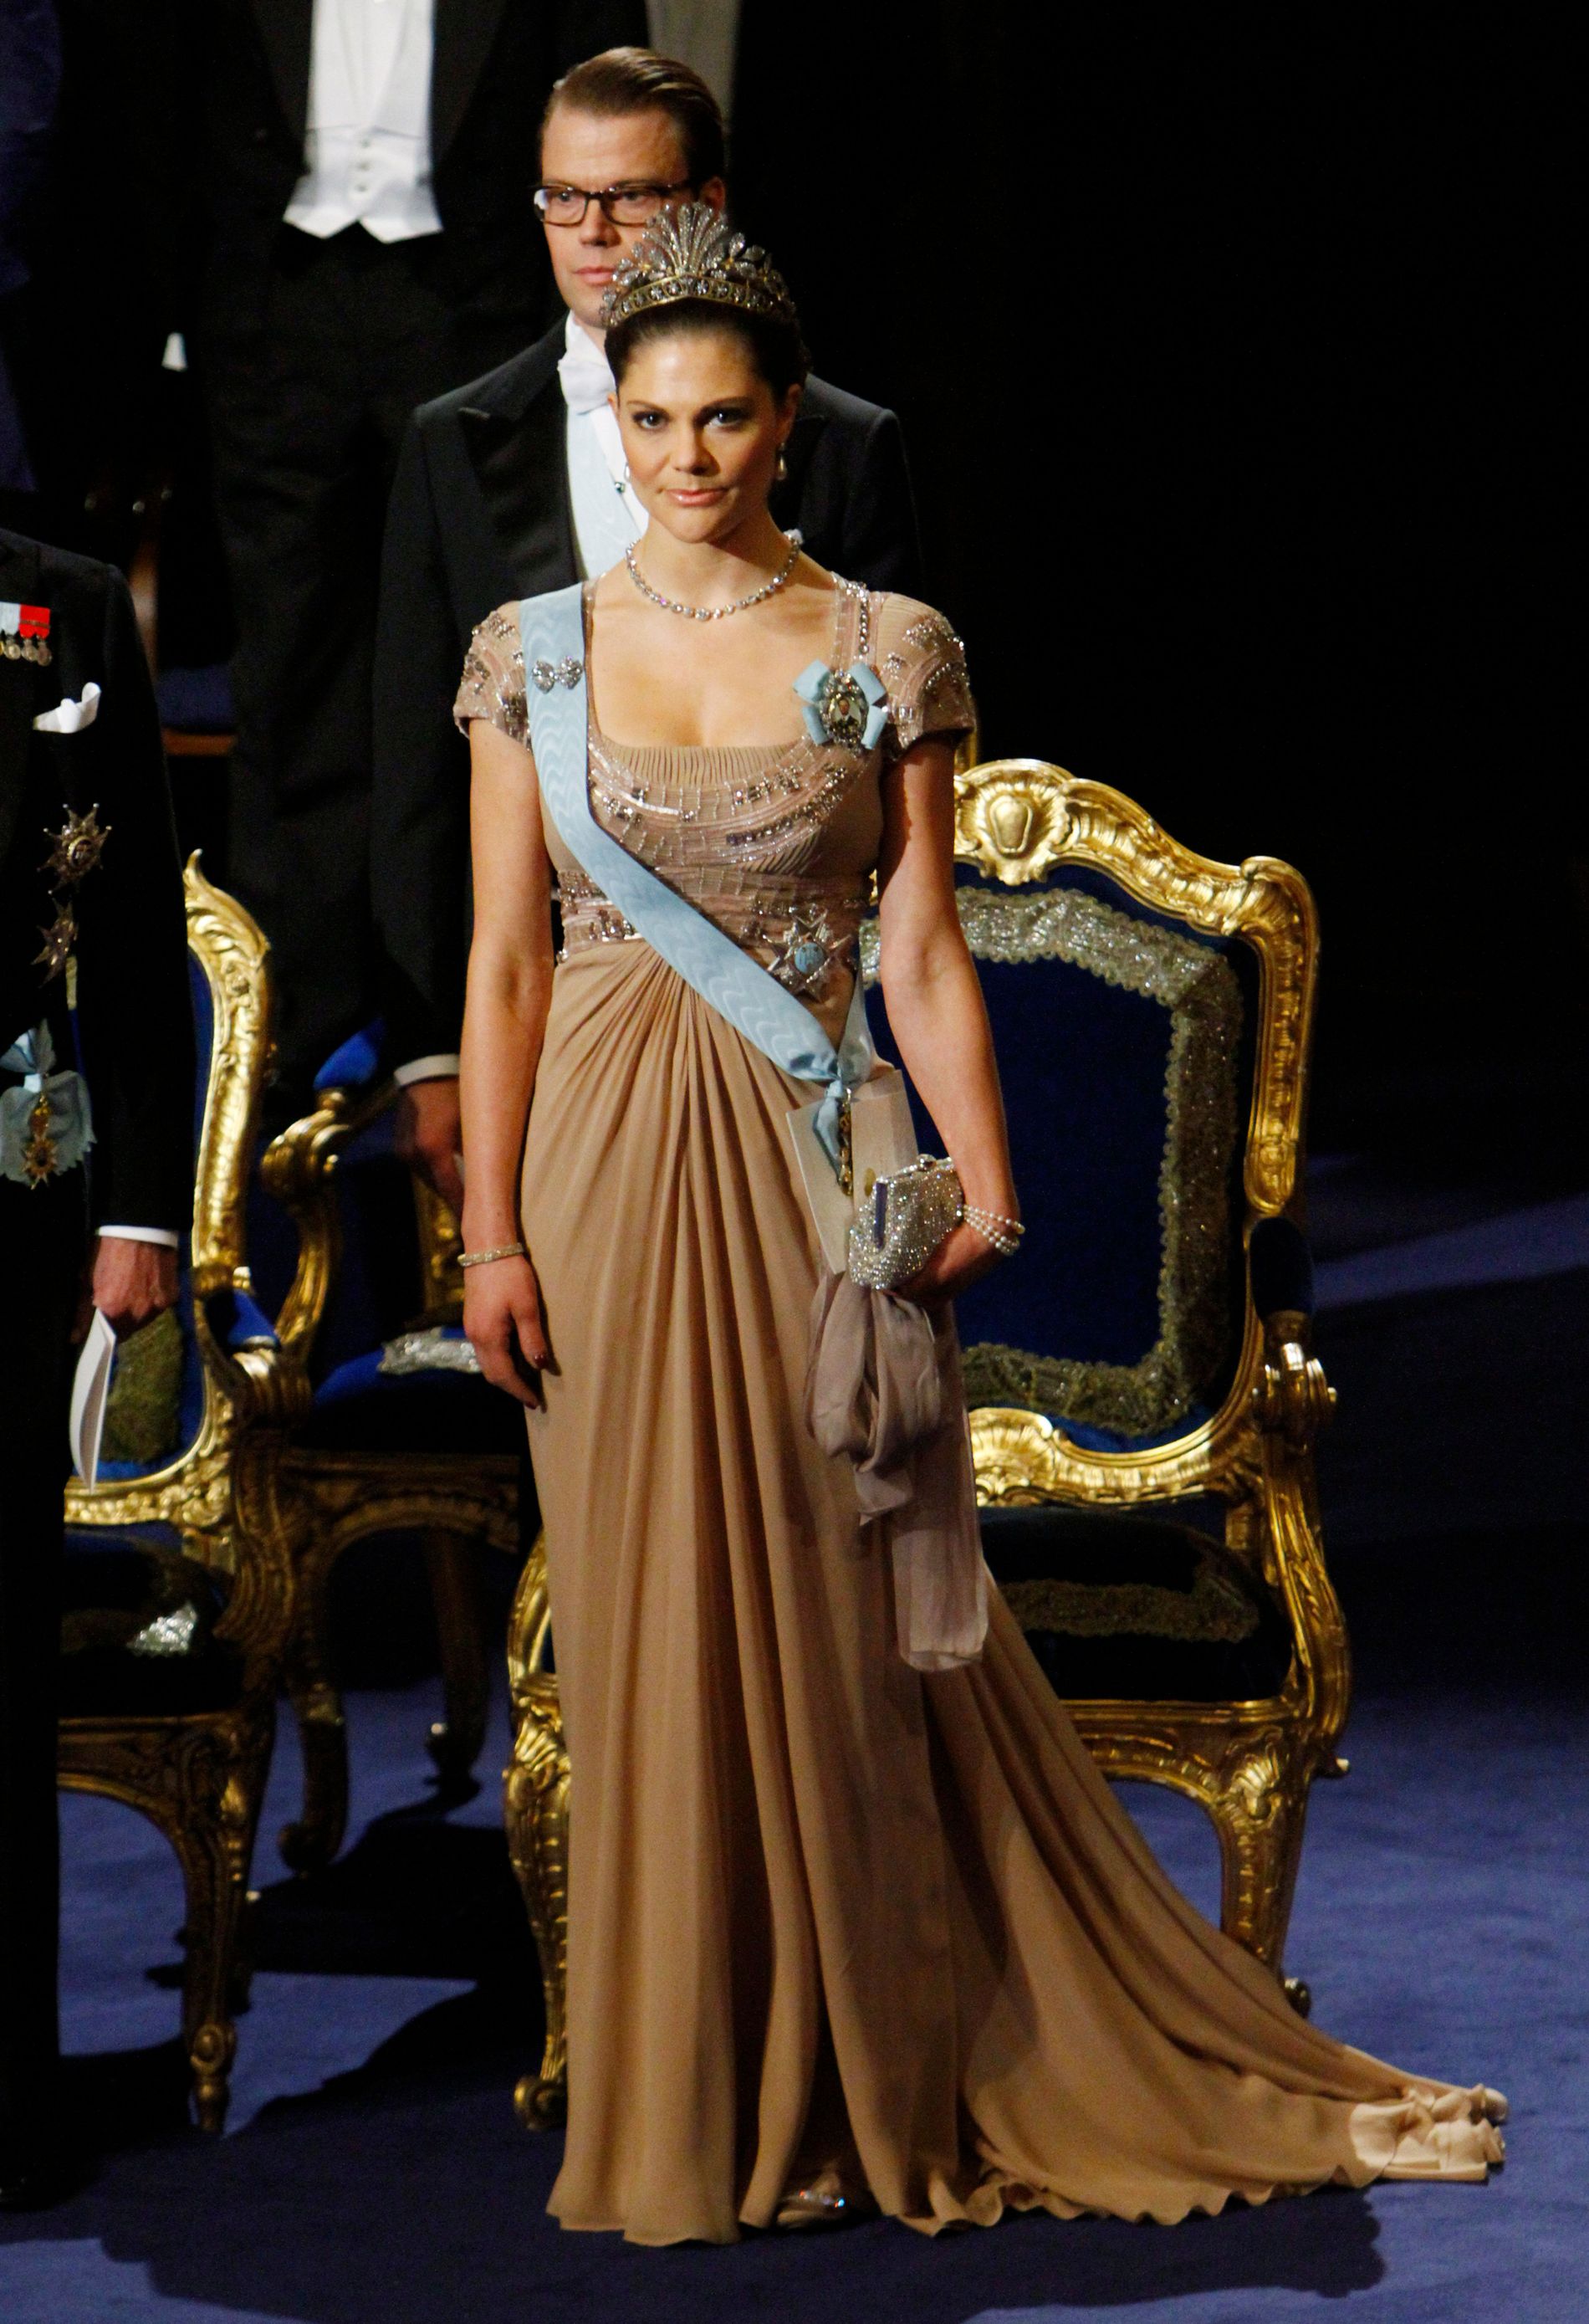 Crown Princess Victoria Nobel Prize Award Ceremony